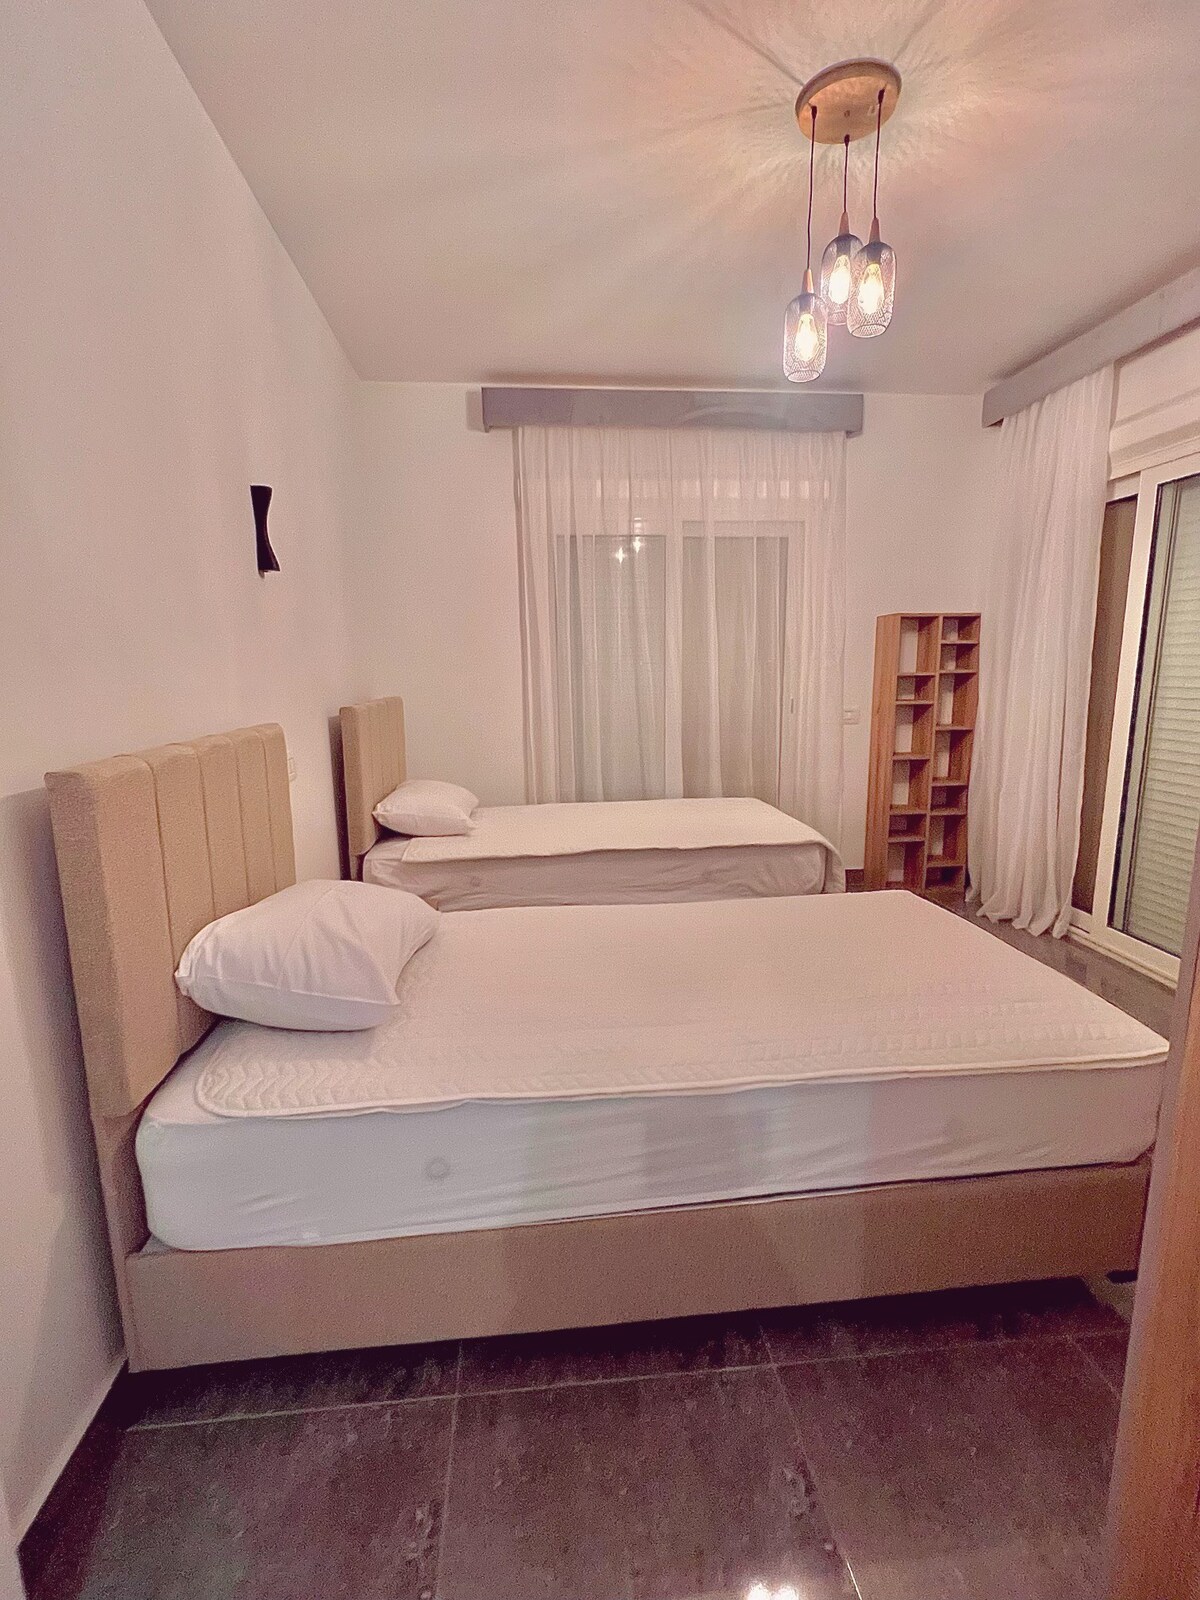 Modern simple 2-bedroom luxurious apartment.